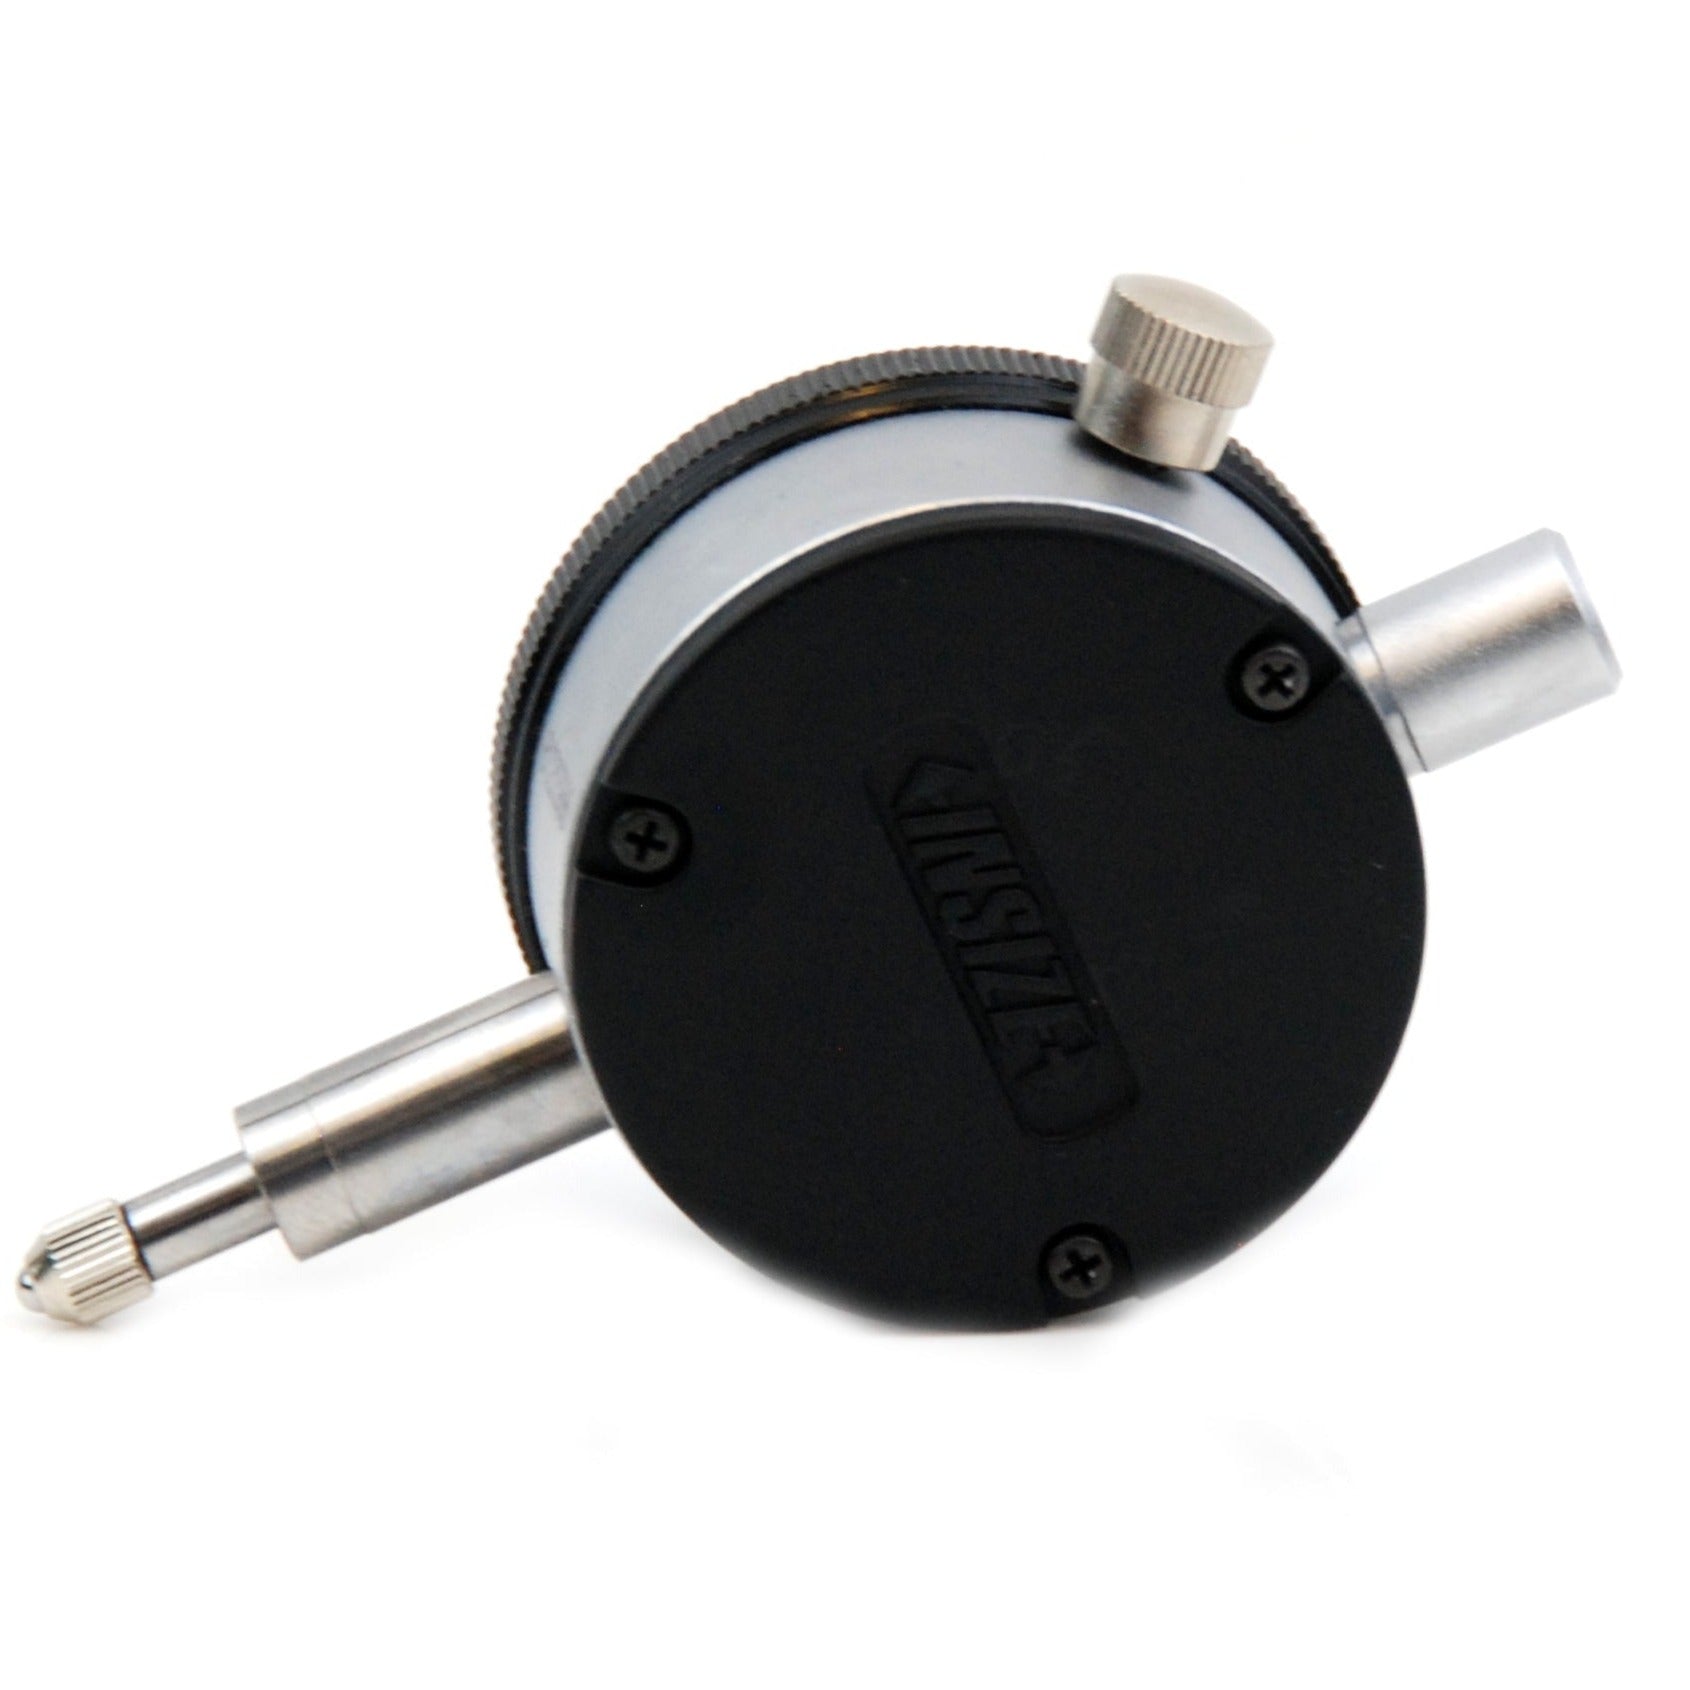 Insize Metric Compact Dial Indicator 5mm Range Series 2311-5F